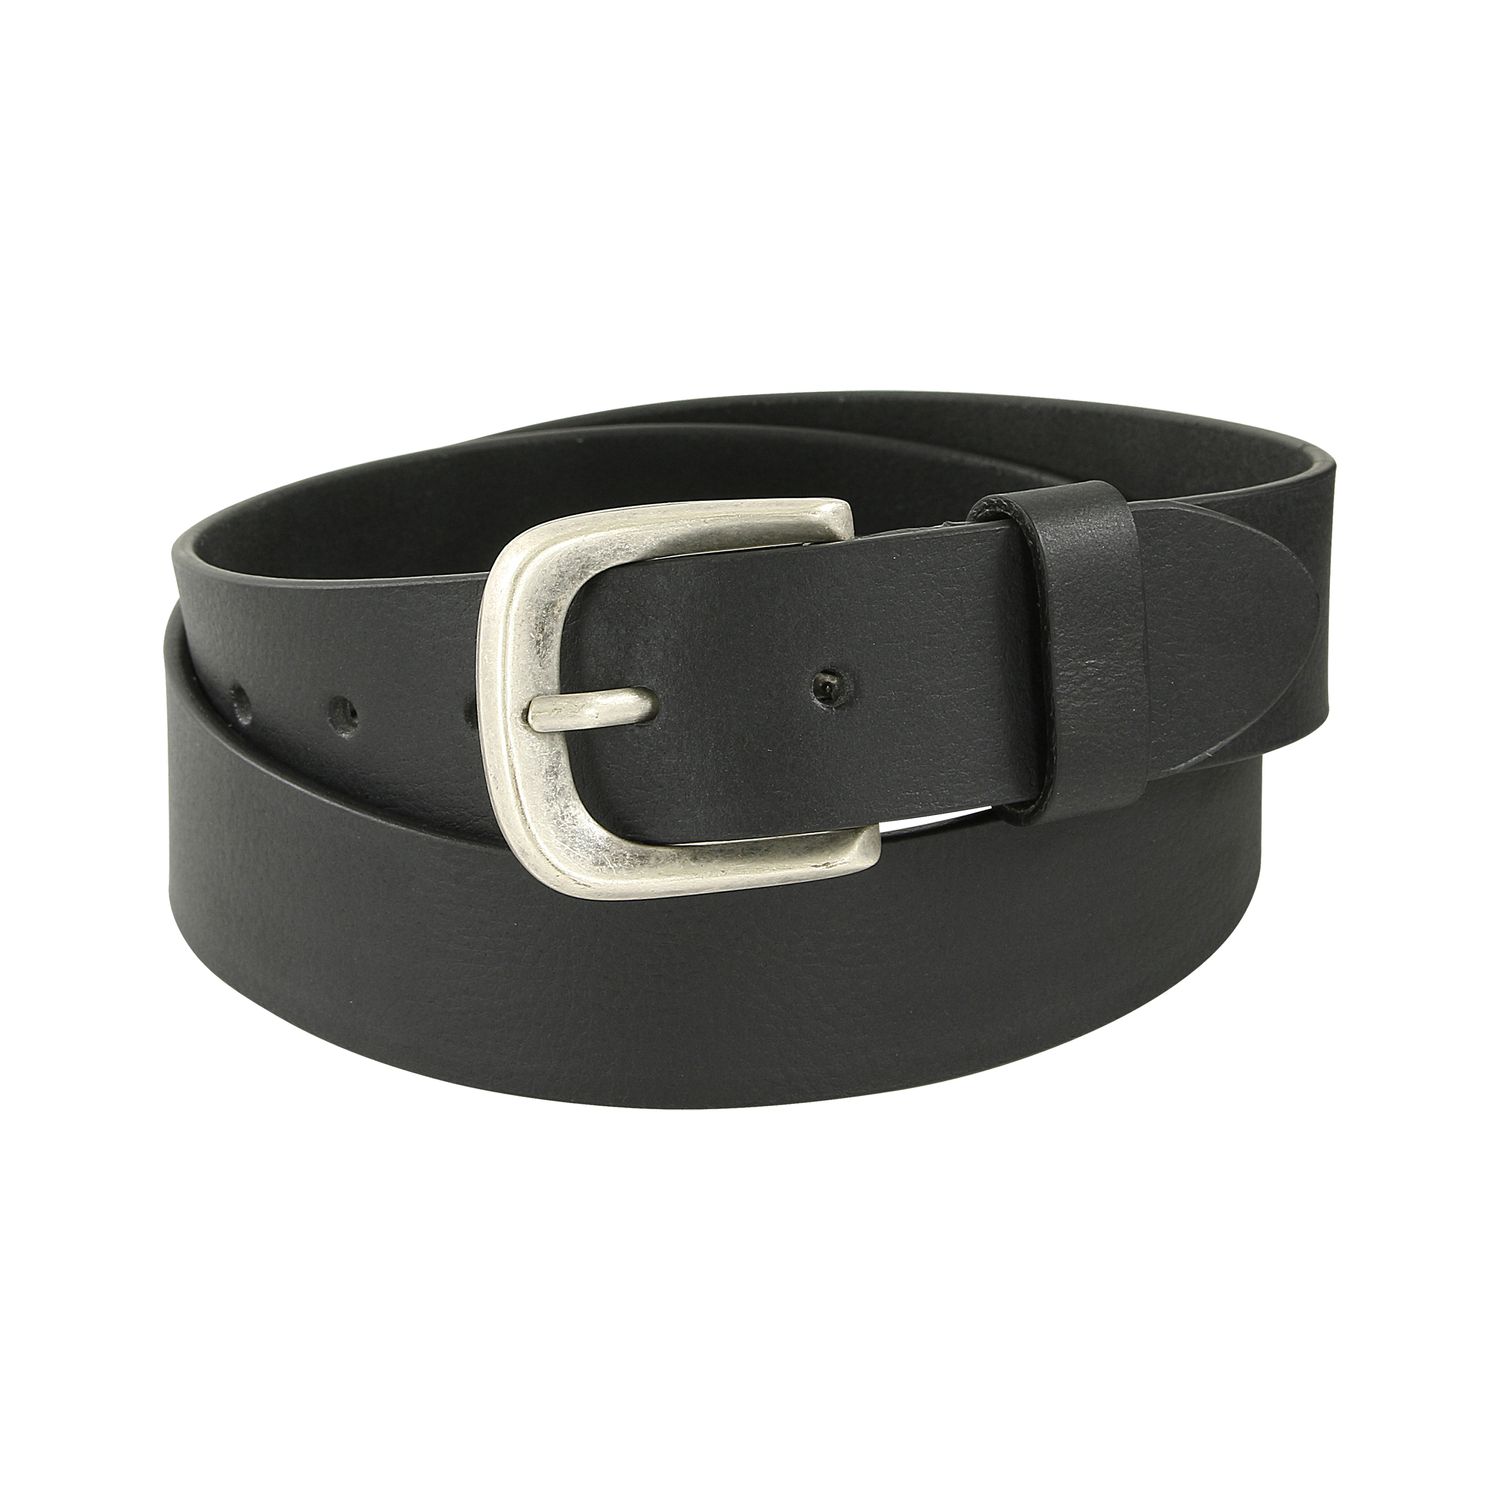 Buffalo leather belt in black by Pionier in large sizes 95 - 150